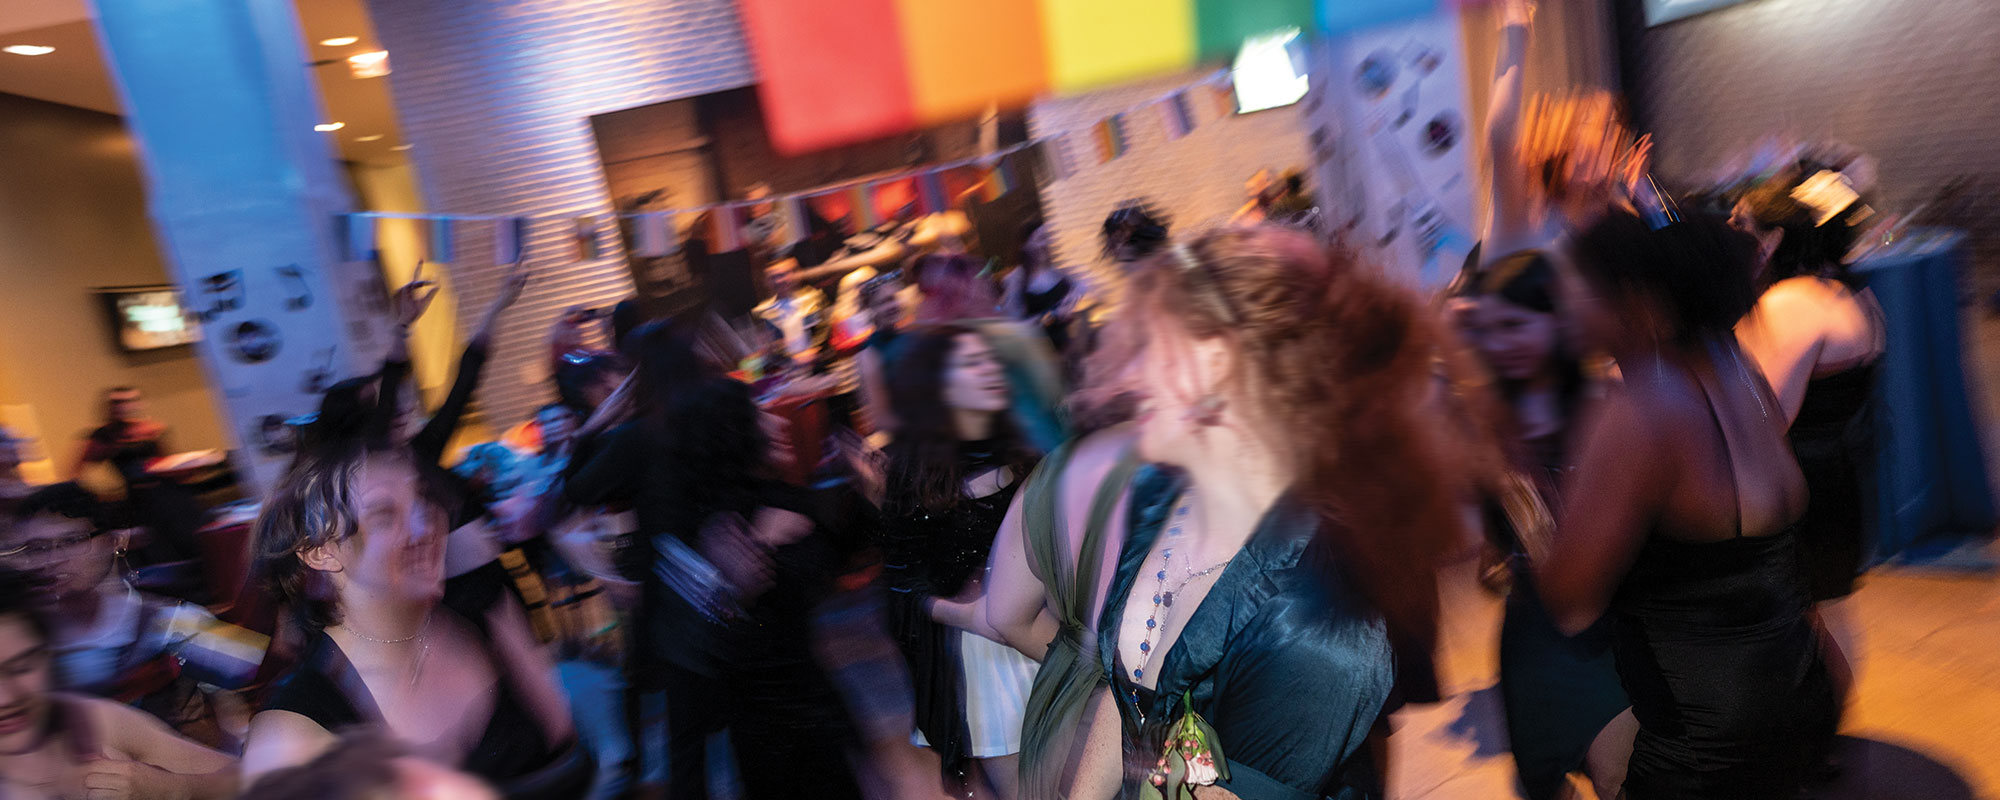 Teens dancing at the LGBTQ prom at the Warhol Museum.